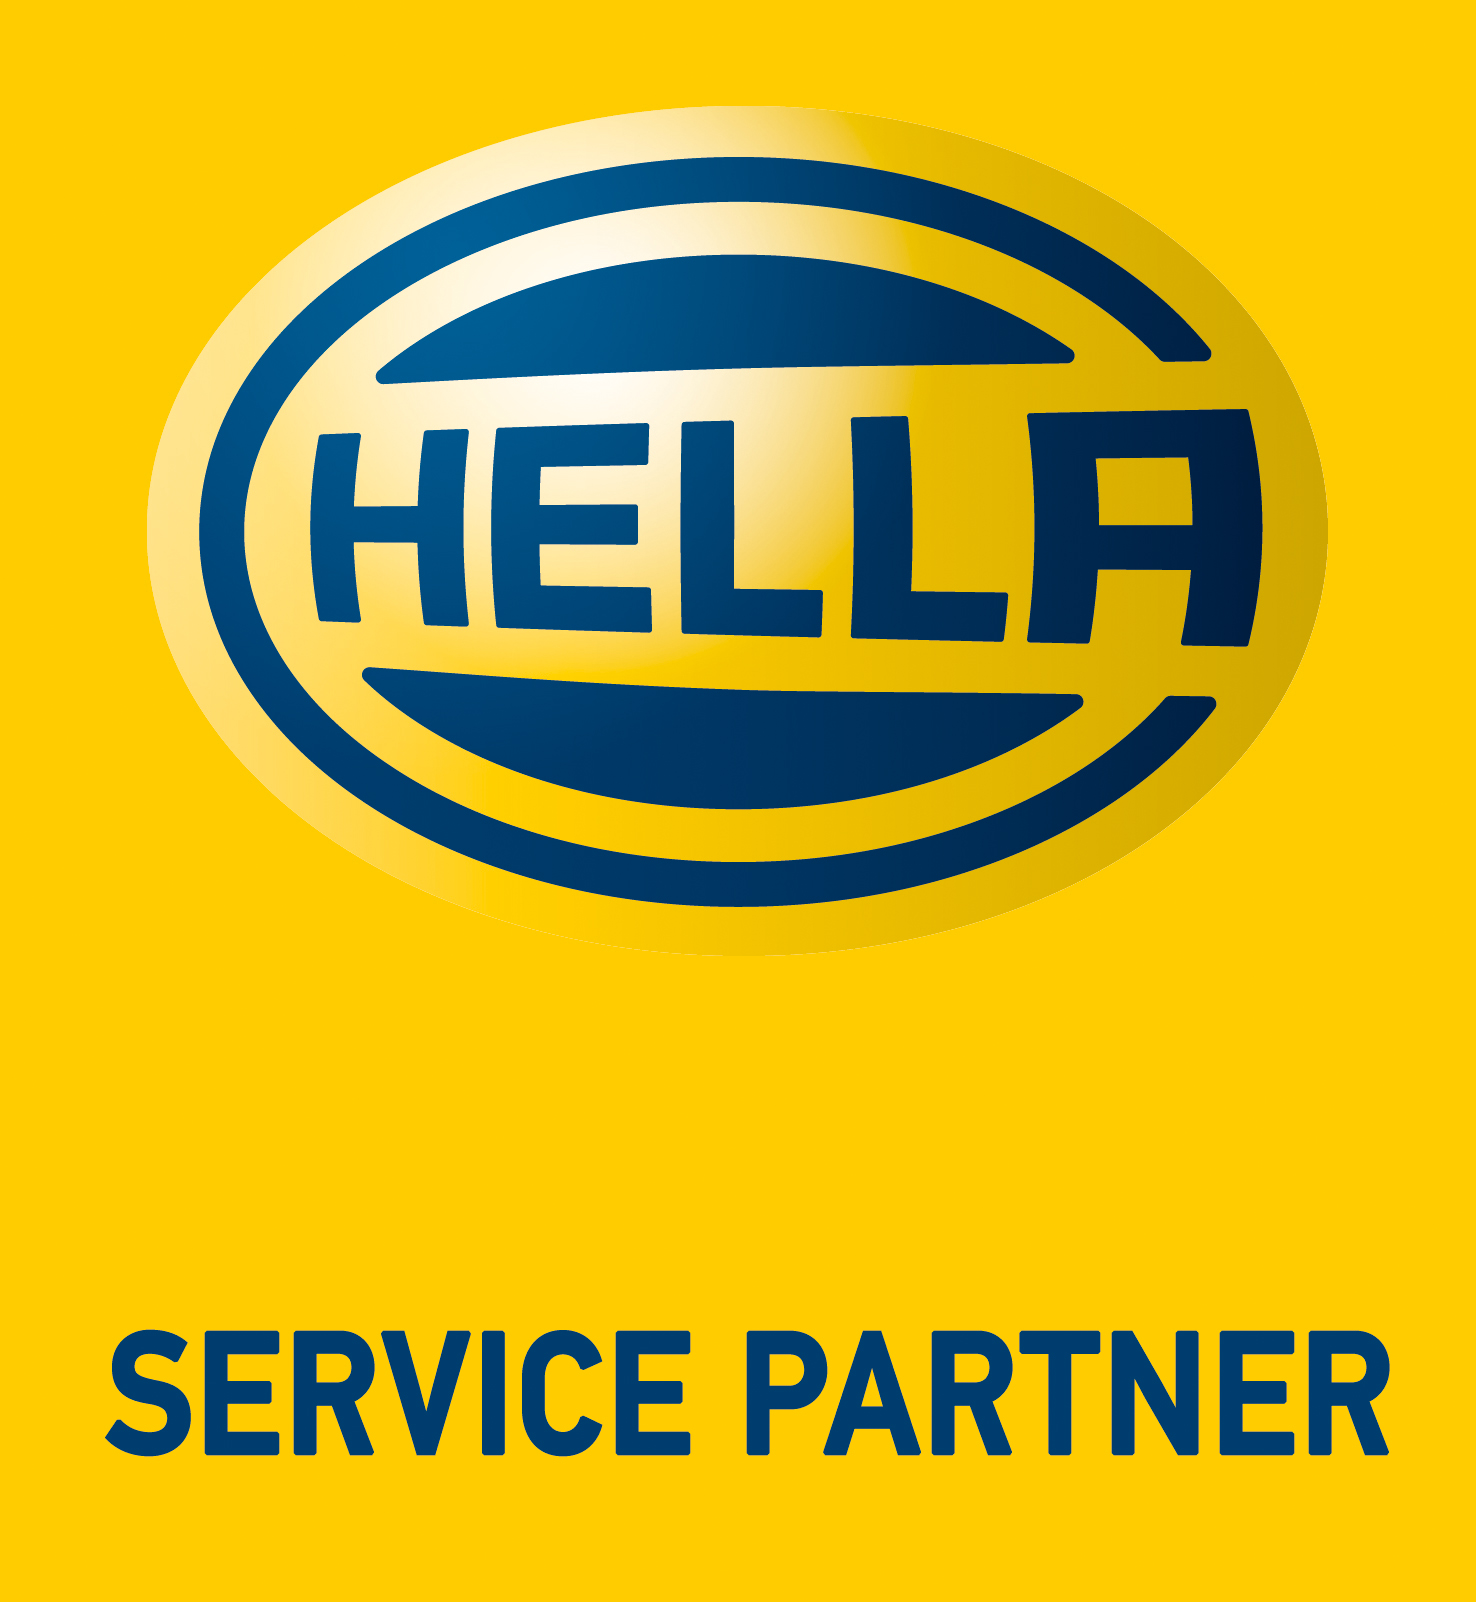 Sauer's Auto - Hella Service Partner logo